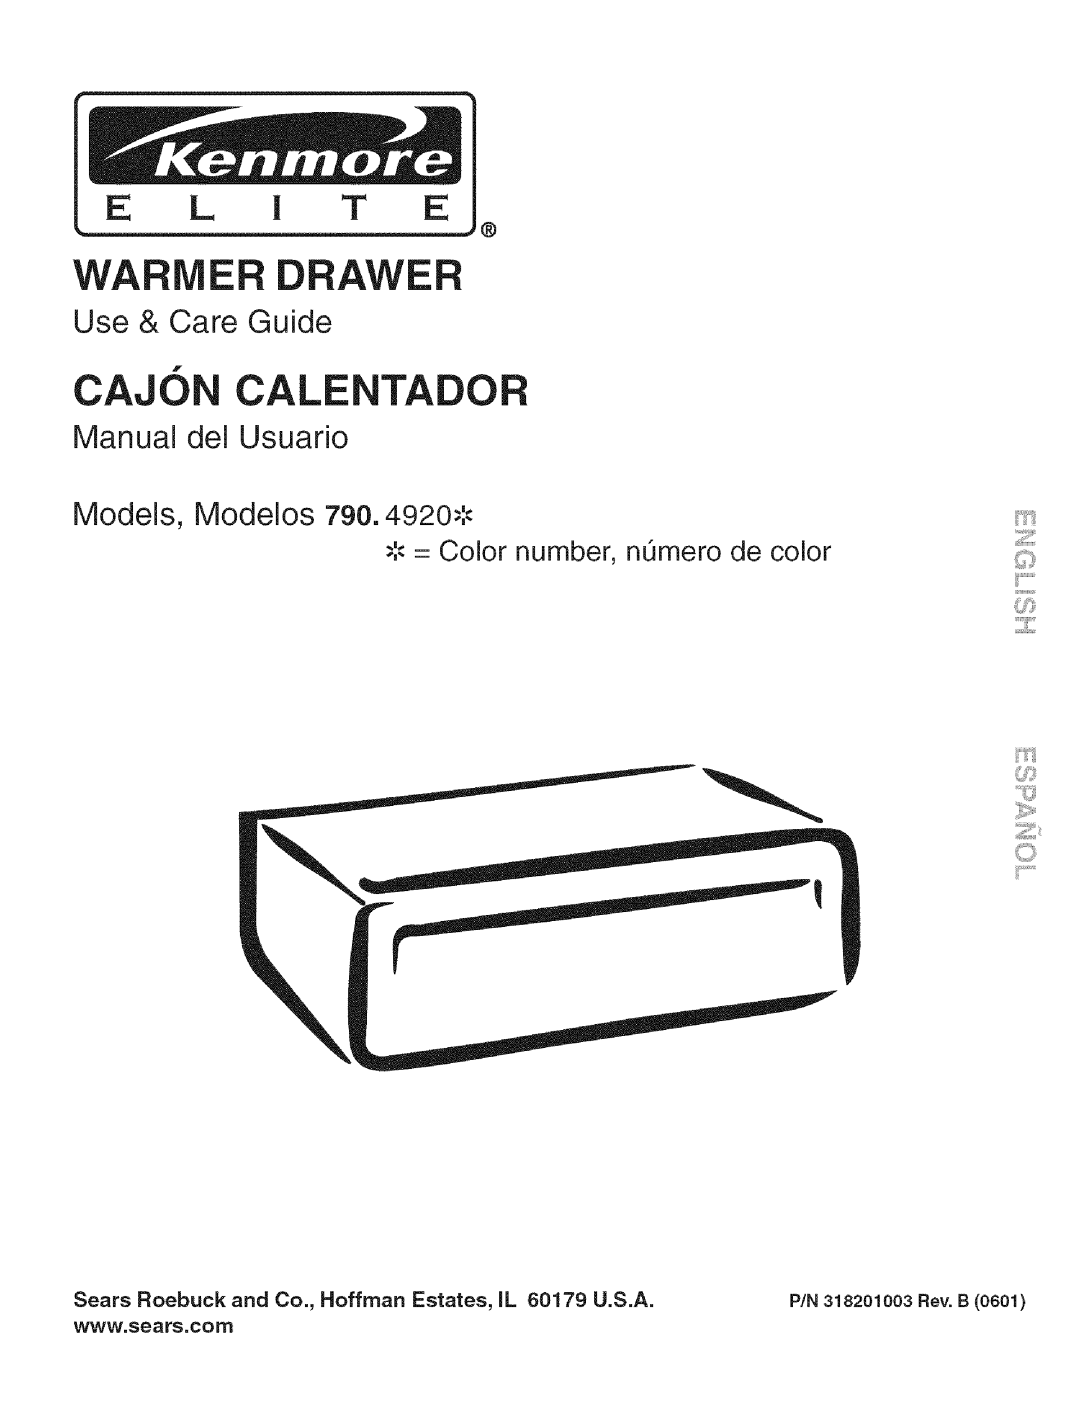 Kenmore 790.492 manual = Color number, nQmero de color, Cajon Calentado, Use & Care Guide 